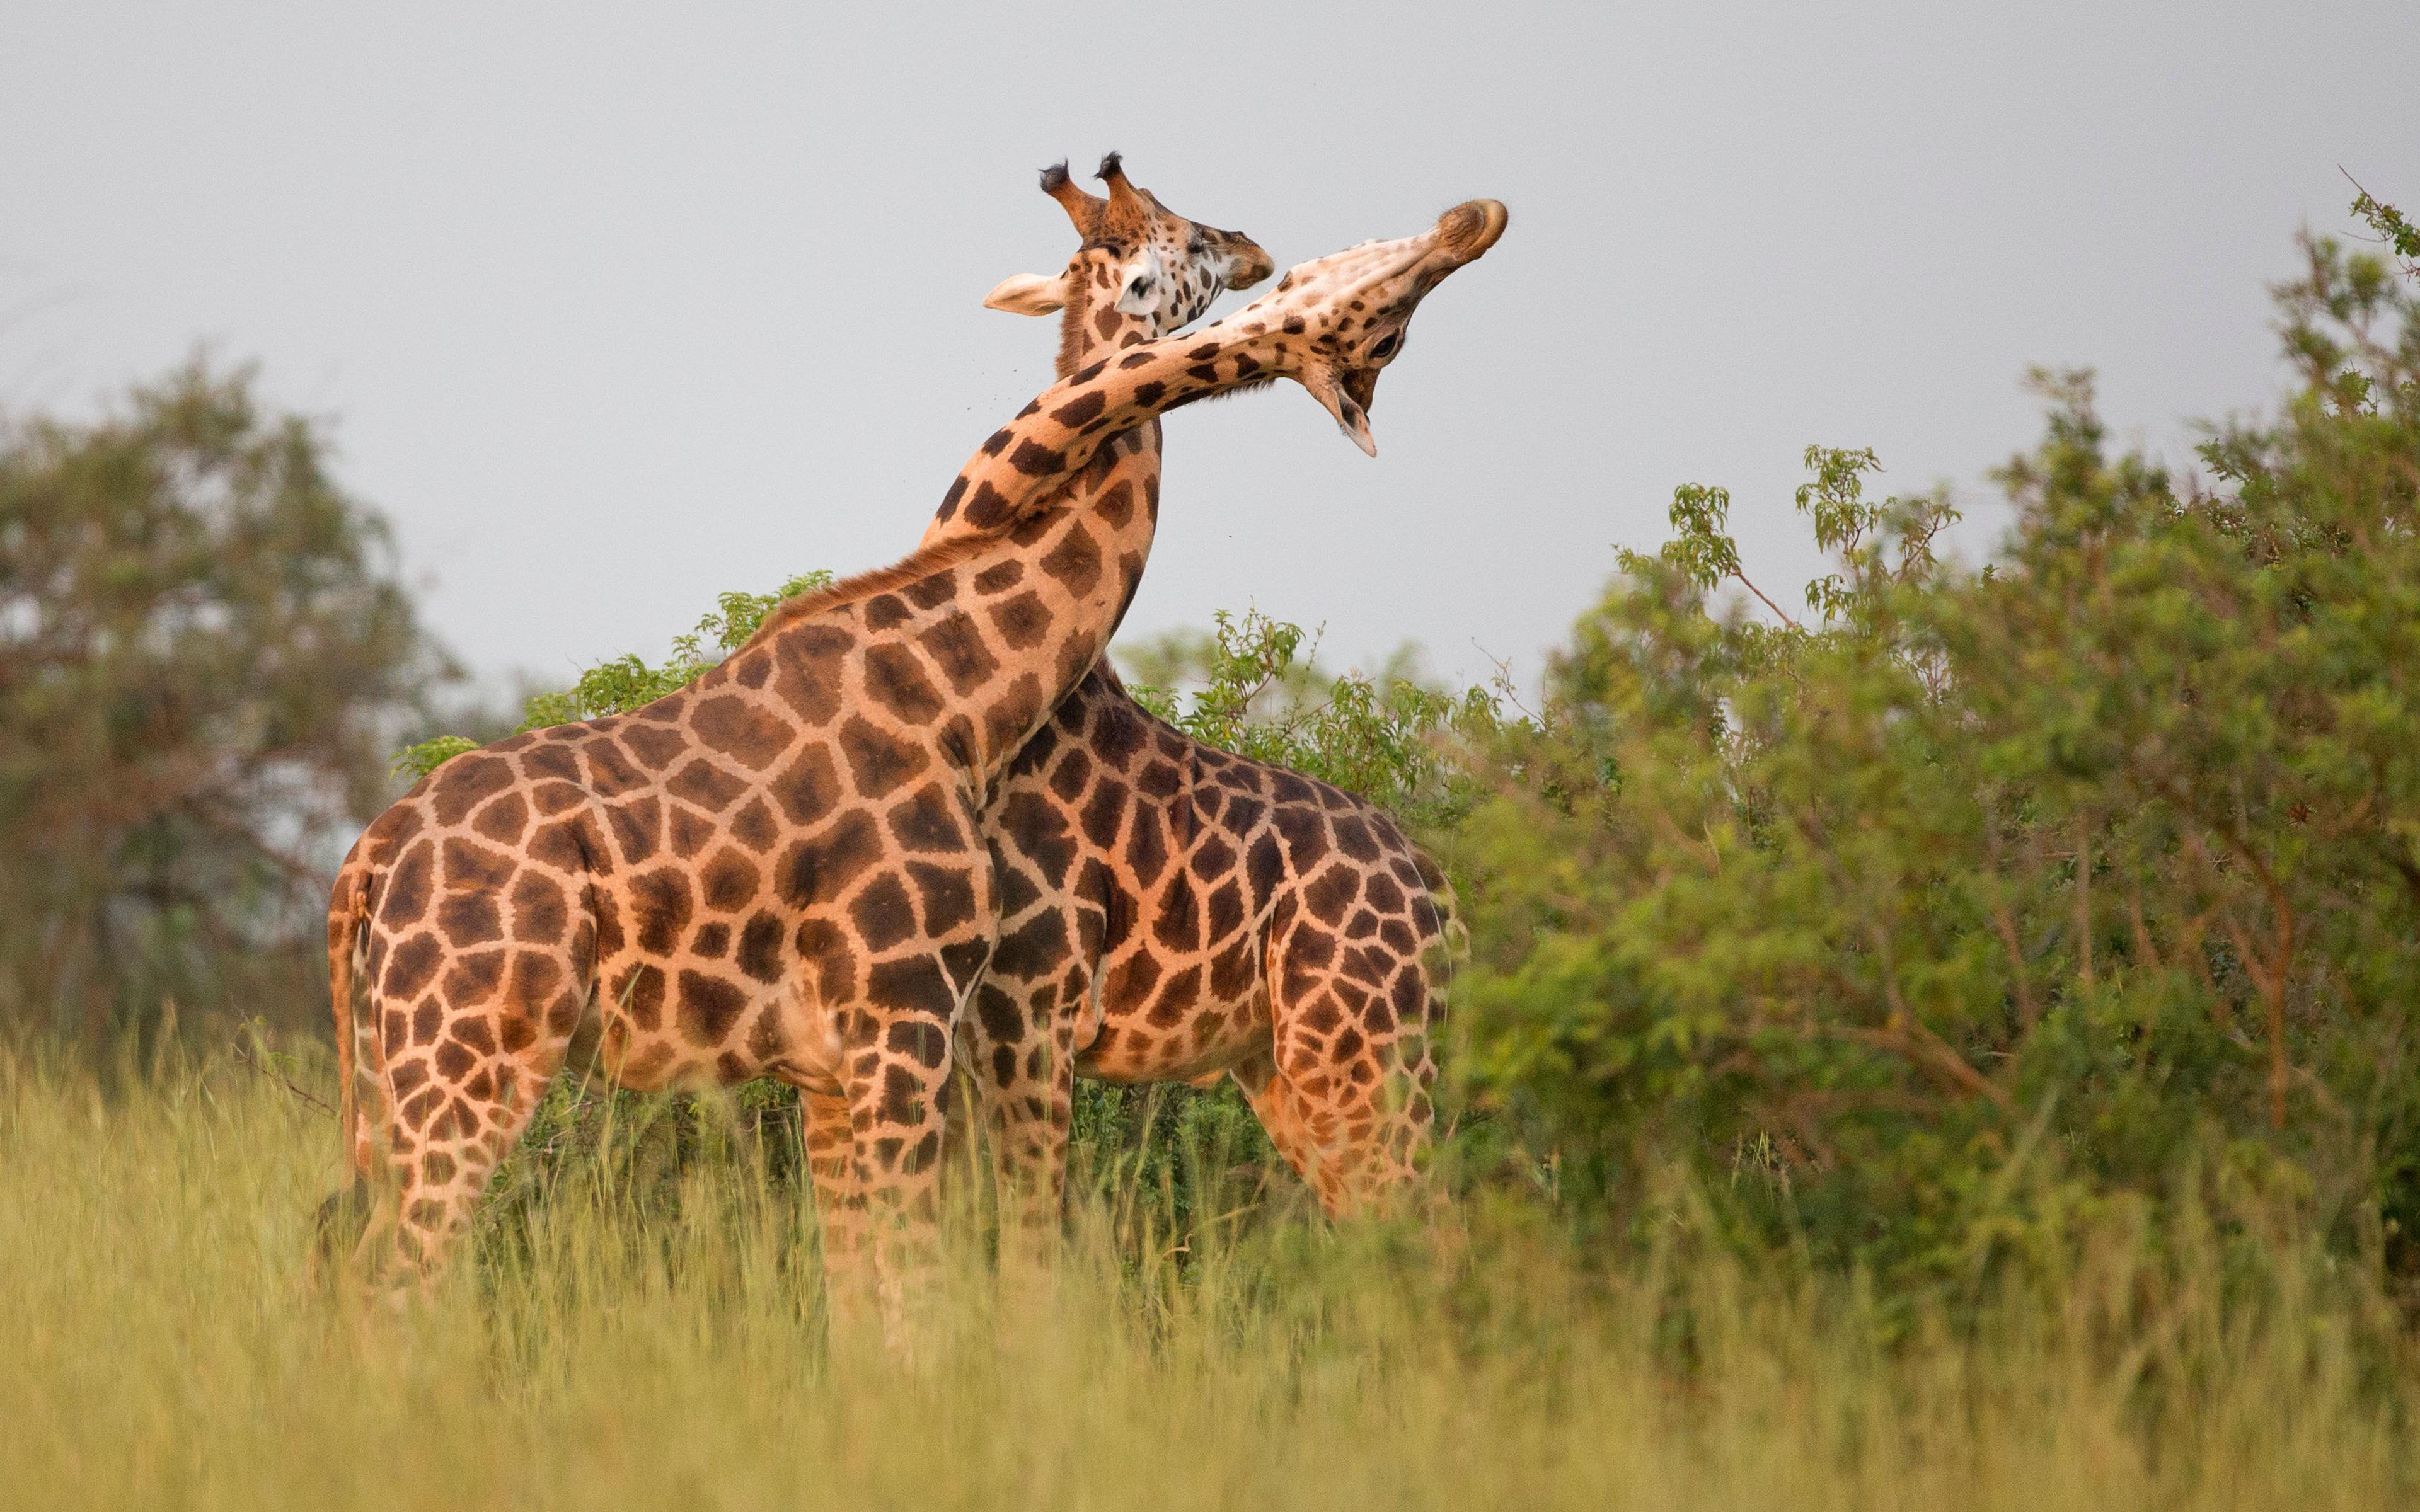 Giraffe African Animal Mammals Males Establish Social Hierarchies Over